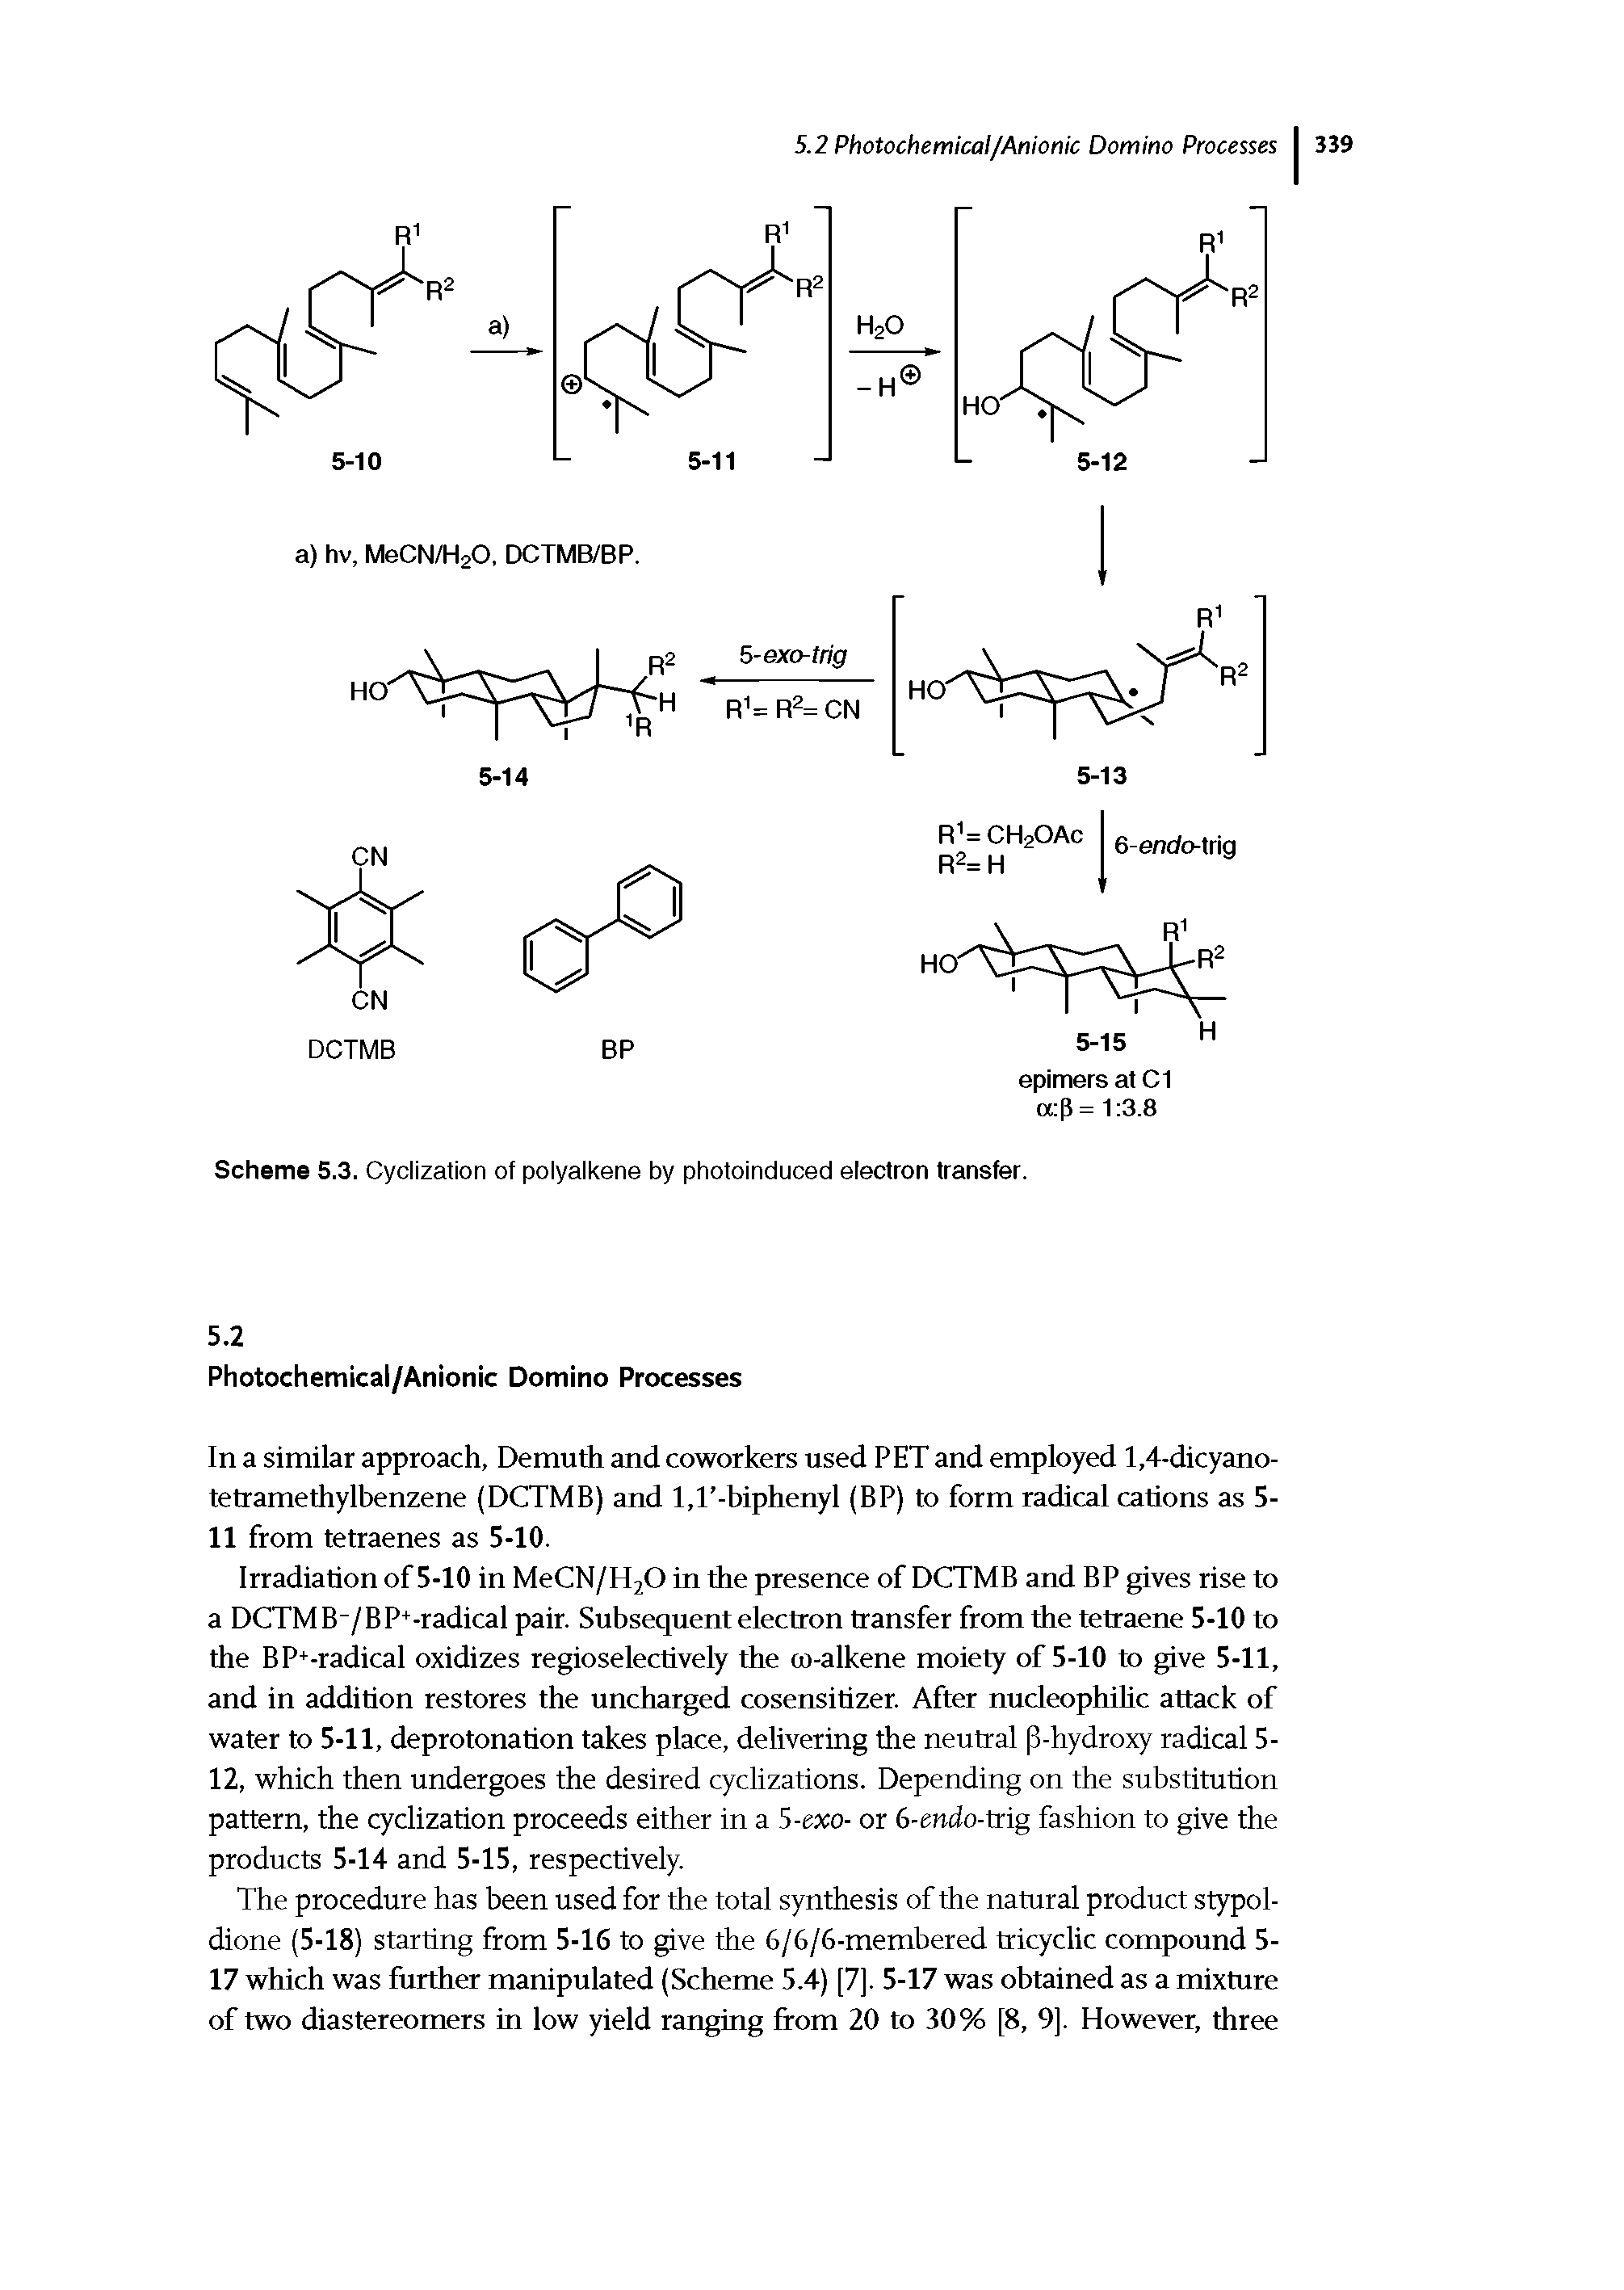 Scheme 5.3. Cyclization of polyalkene by photoinduced electron transfer.